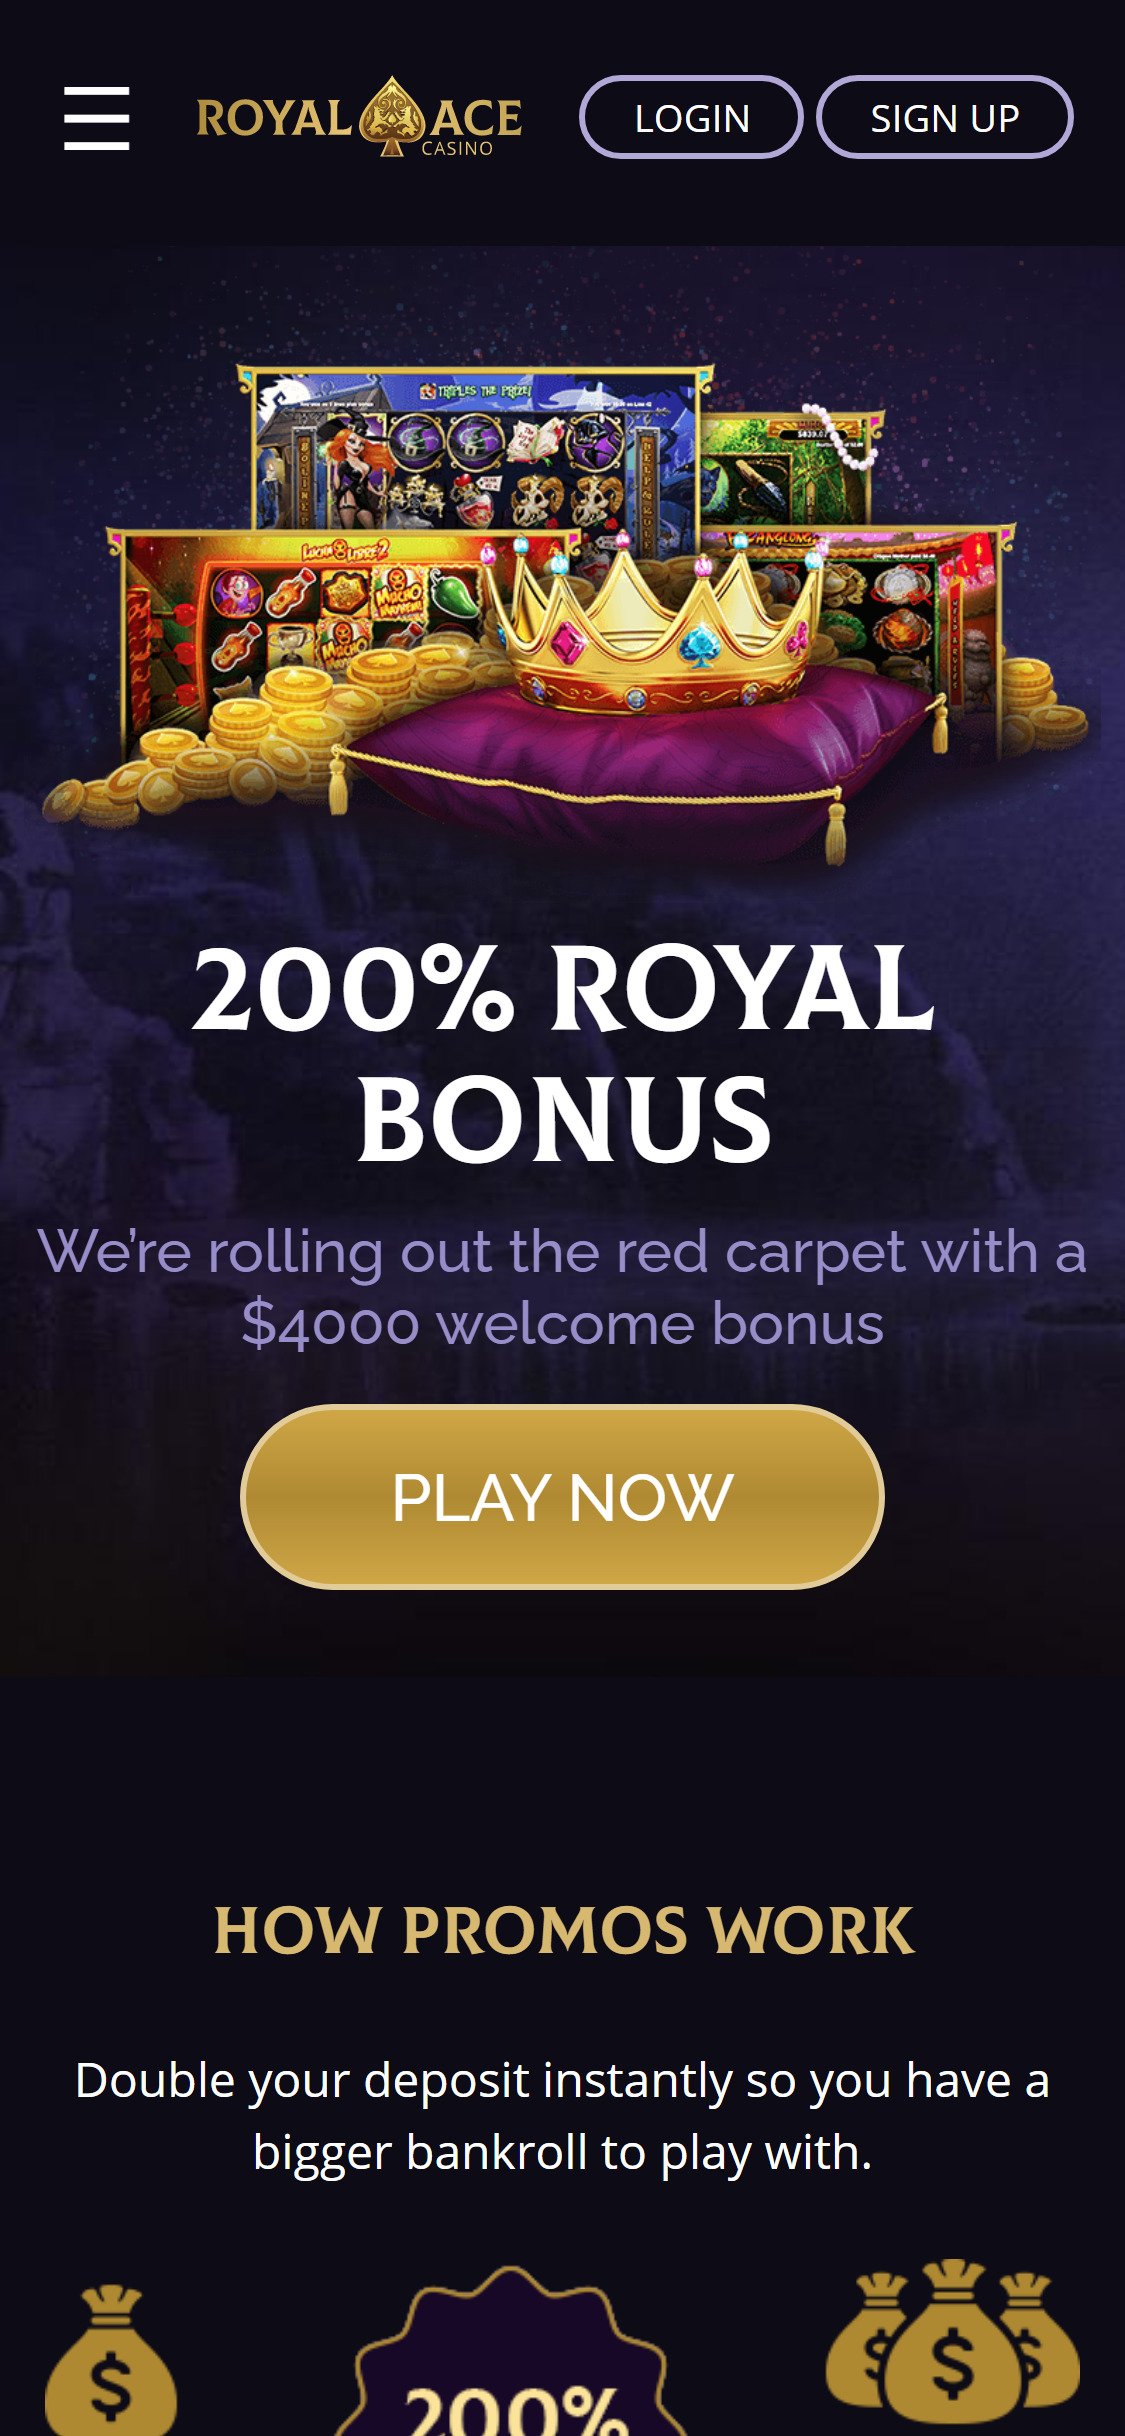 royal ace casino comp points